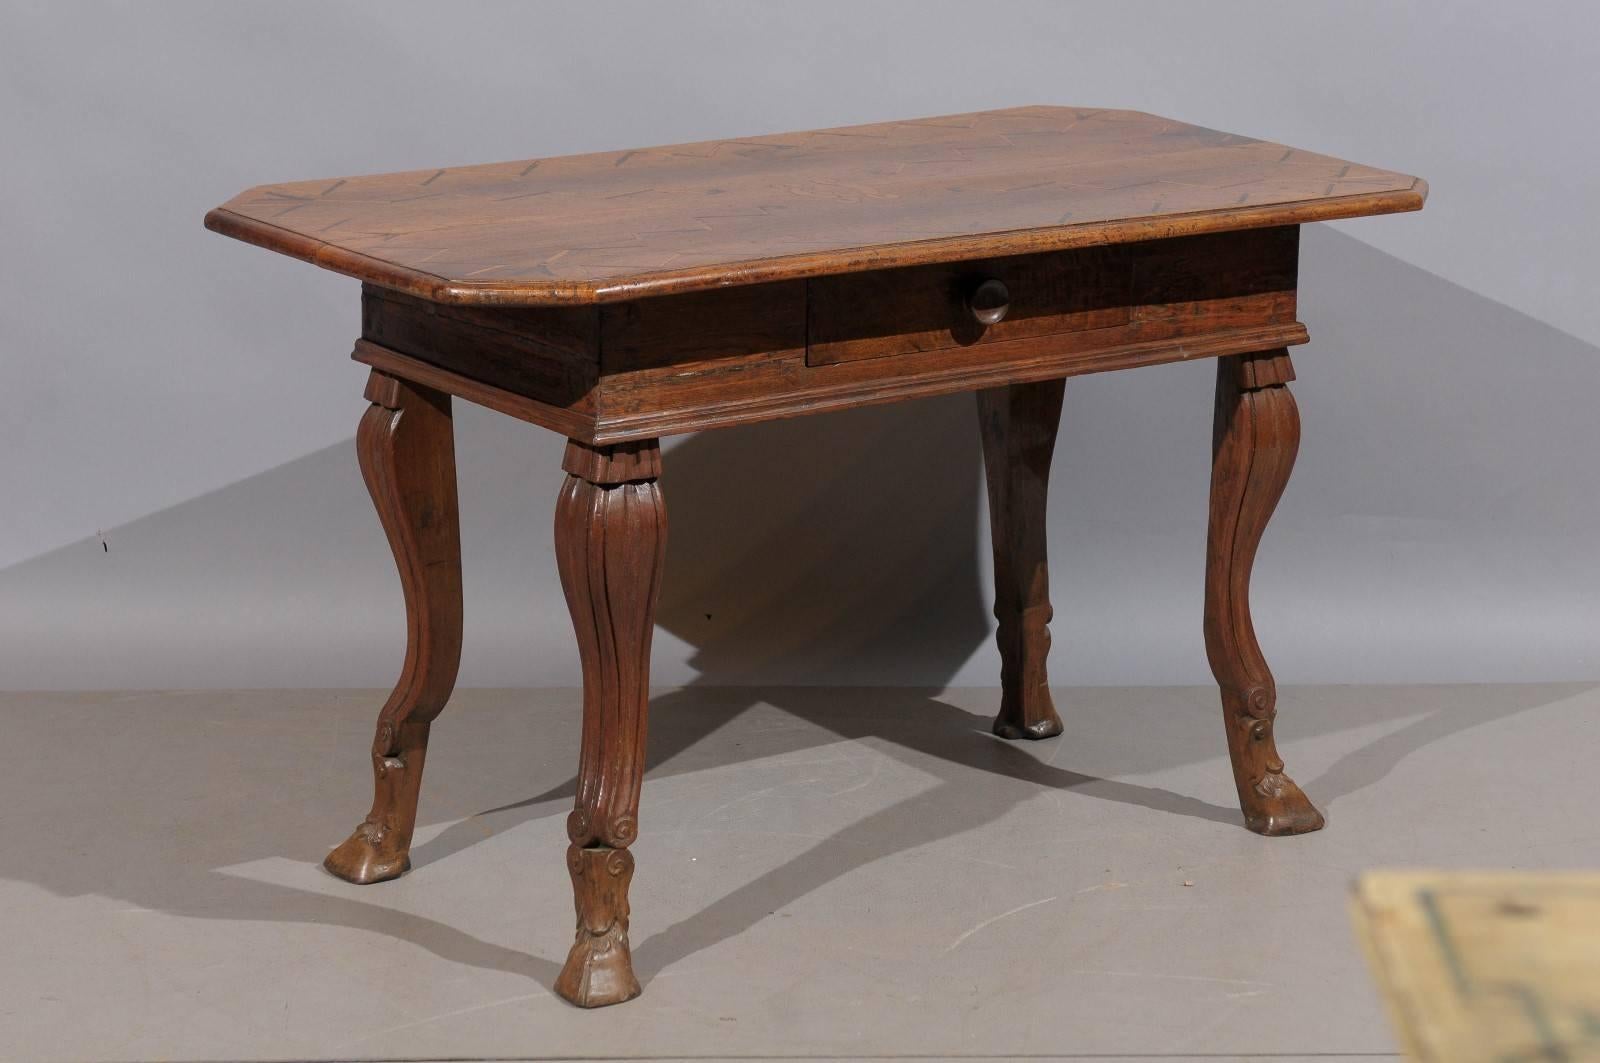 18th century Italian Rococo inlaid walnut writing table with hoofed feet.